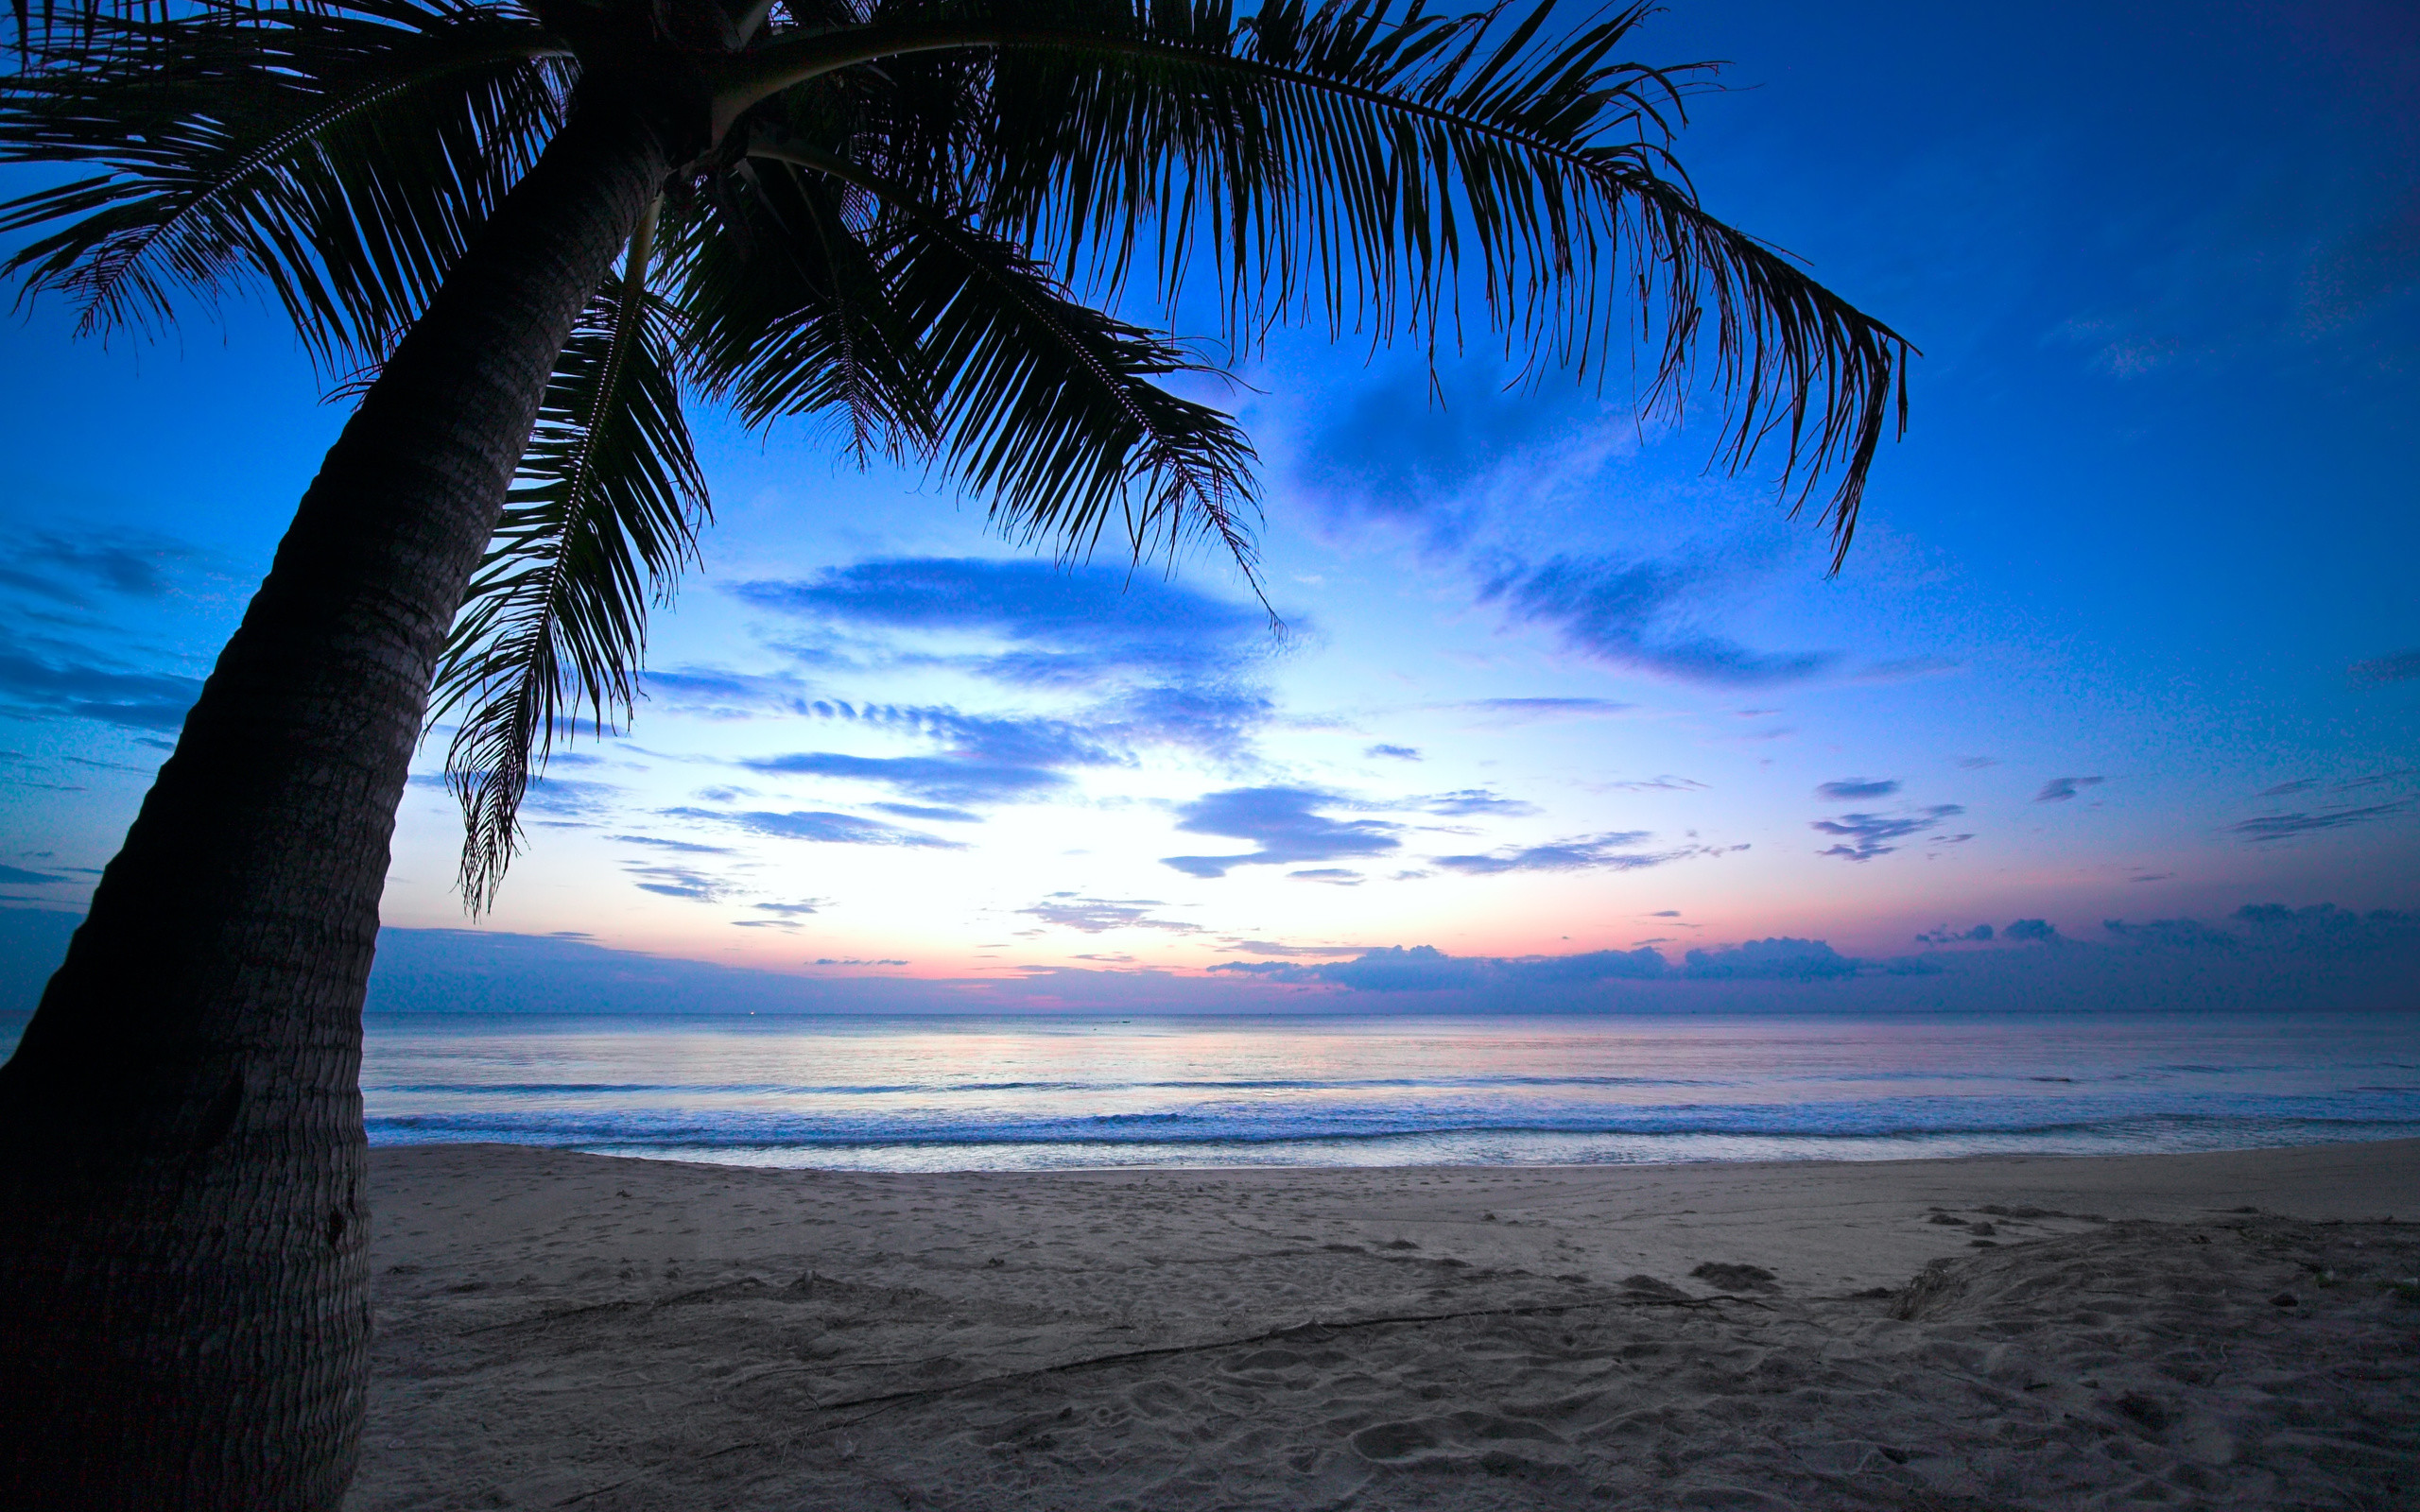 2560x1600 Cloudy sky weeping palm tree tropical sunset caribbean ocean wallpaper |   | 176536 | WallpaperUP